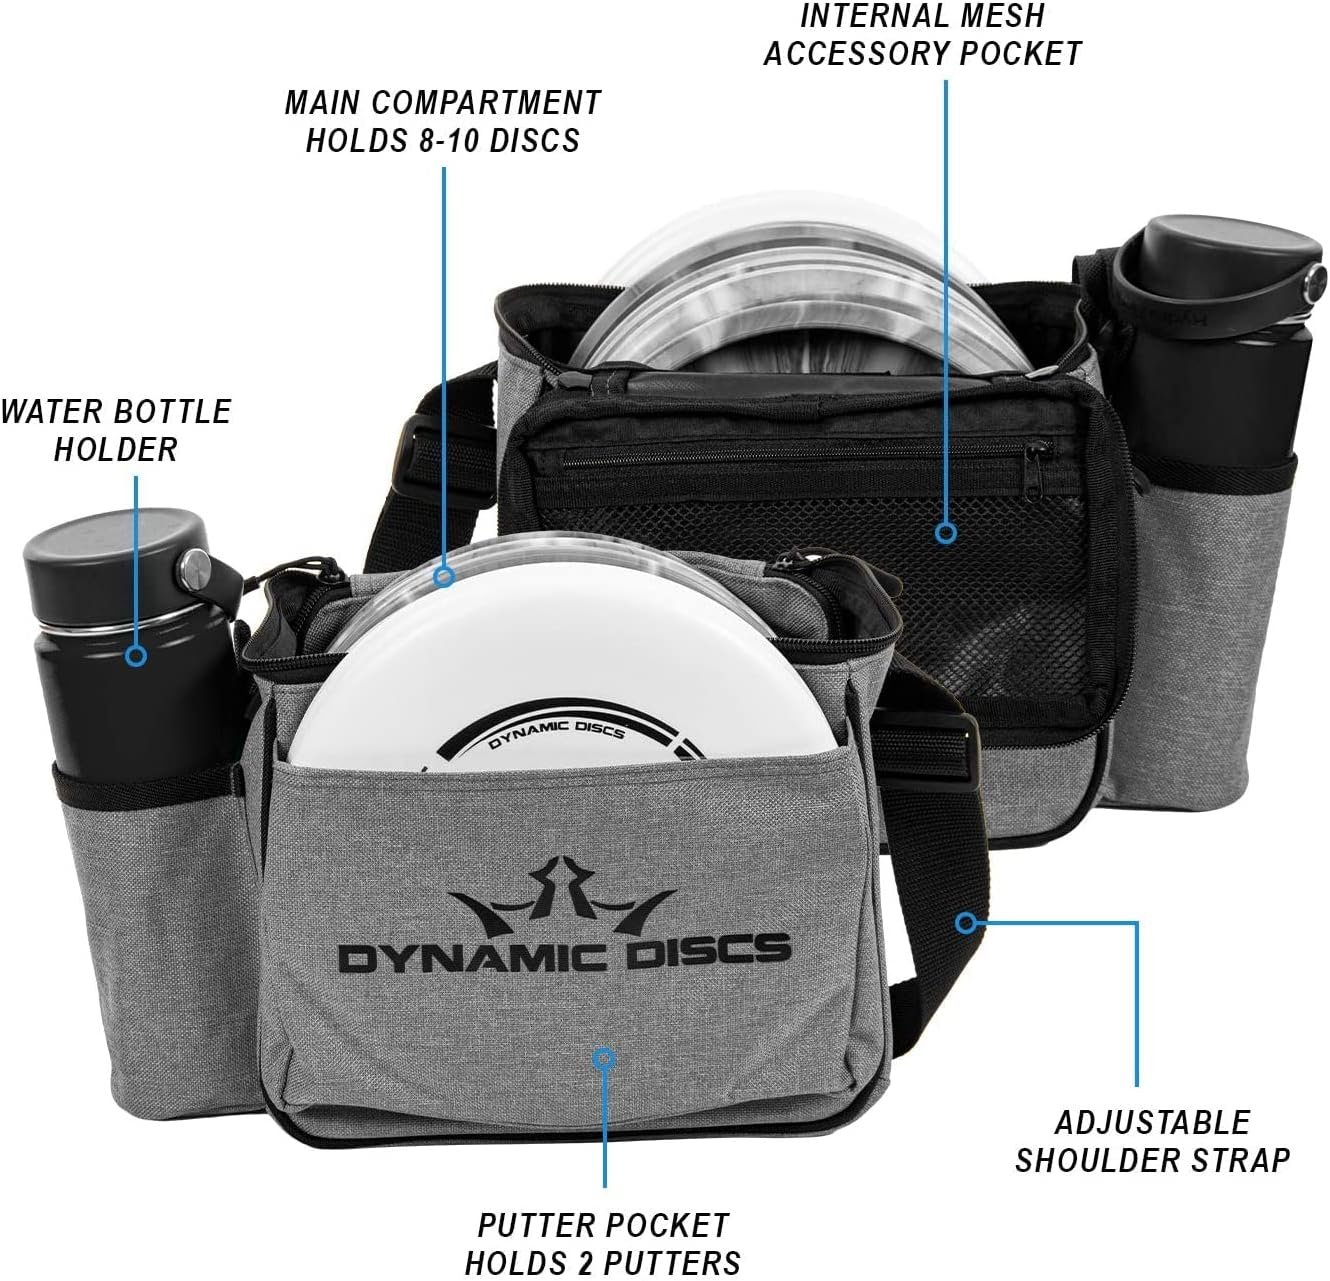 Disc Golf Starter Set with Bag | Dynamic Discs Disc Golf Set - Includes Frisbee Golf Bag, Driver, Midrange, Putter, Towel,  Mini Disc Golf Equipment (Heather Gray) (3 Discs)